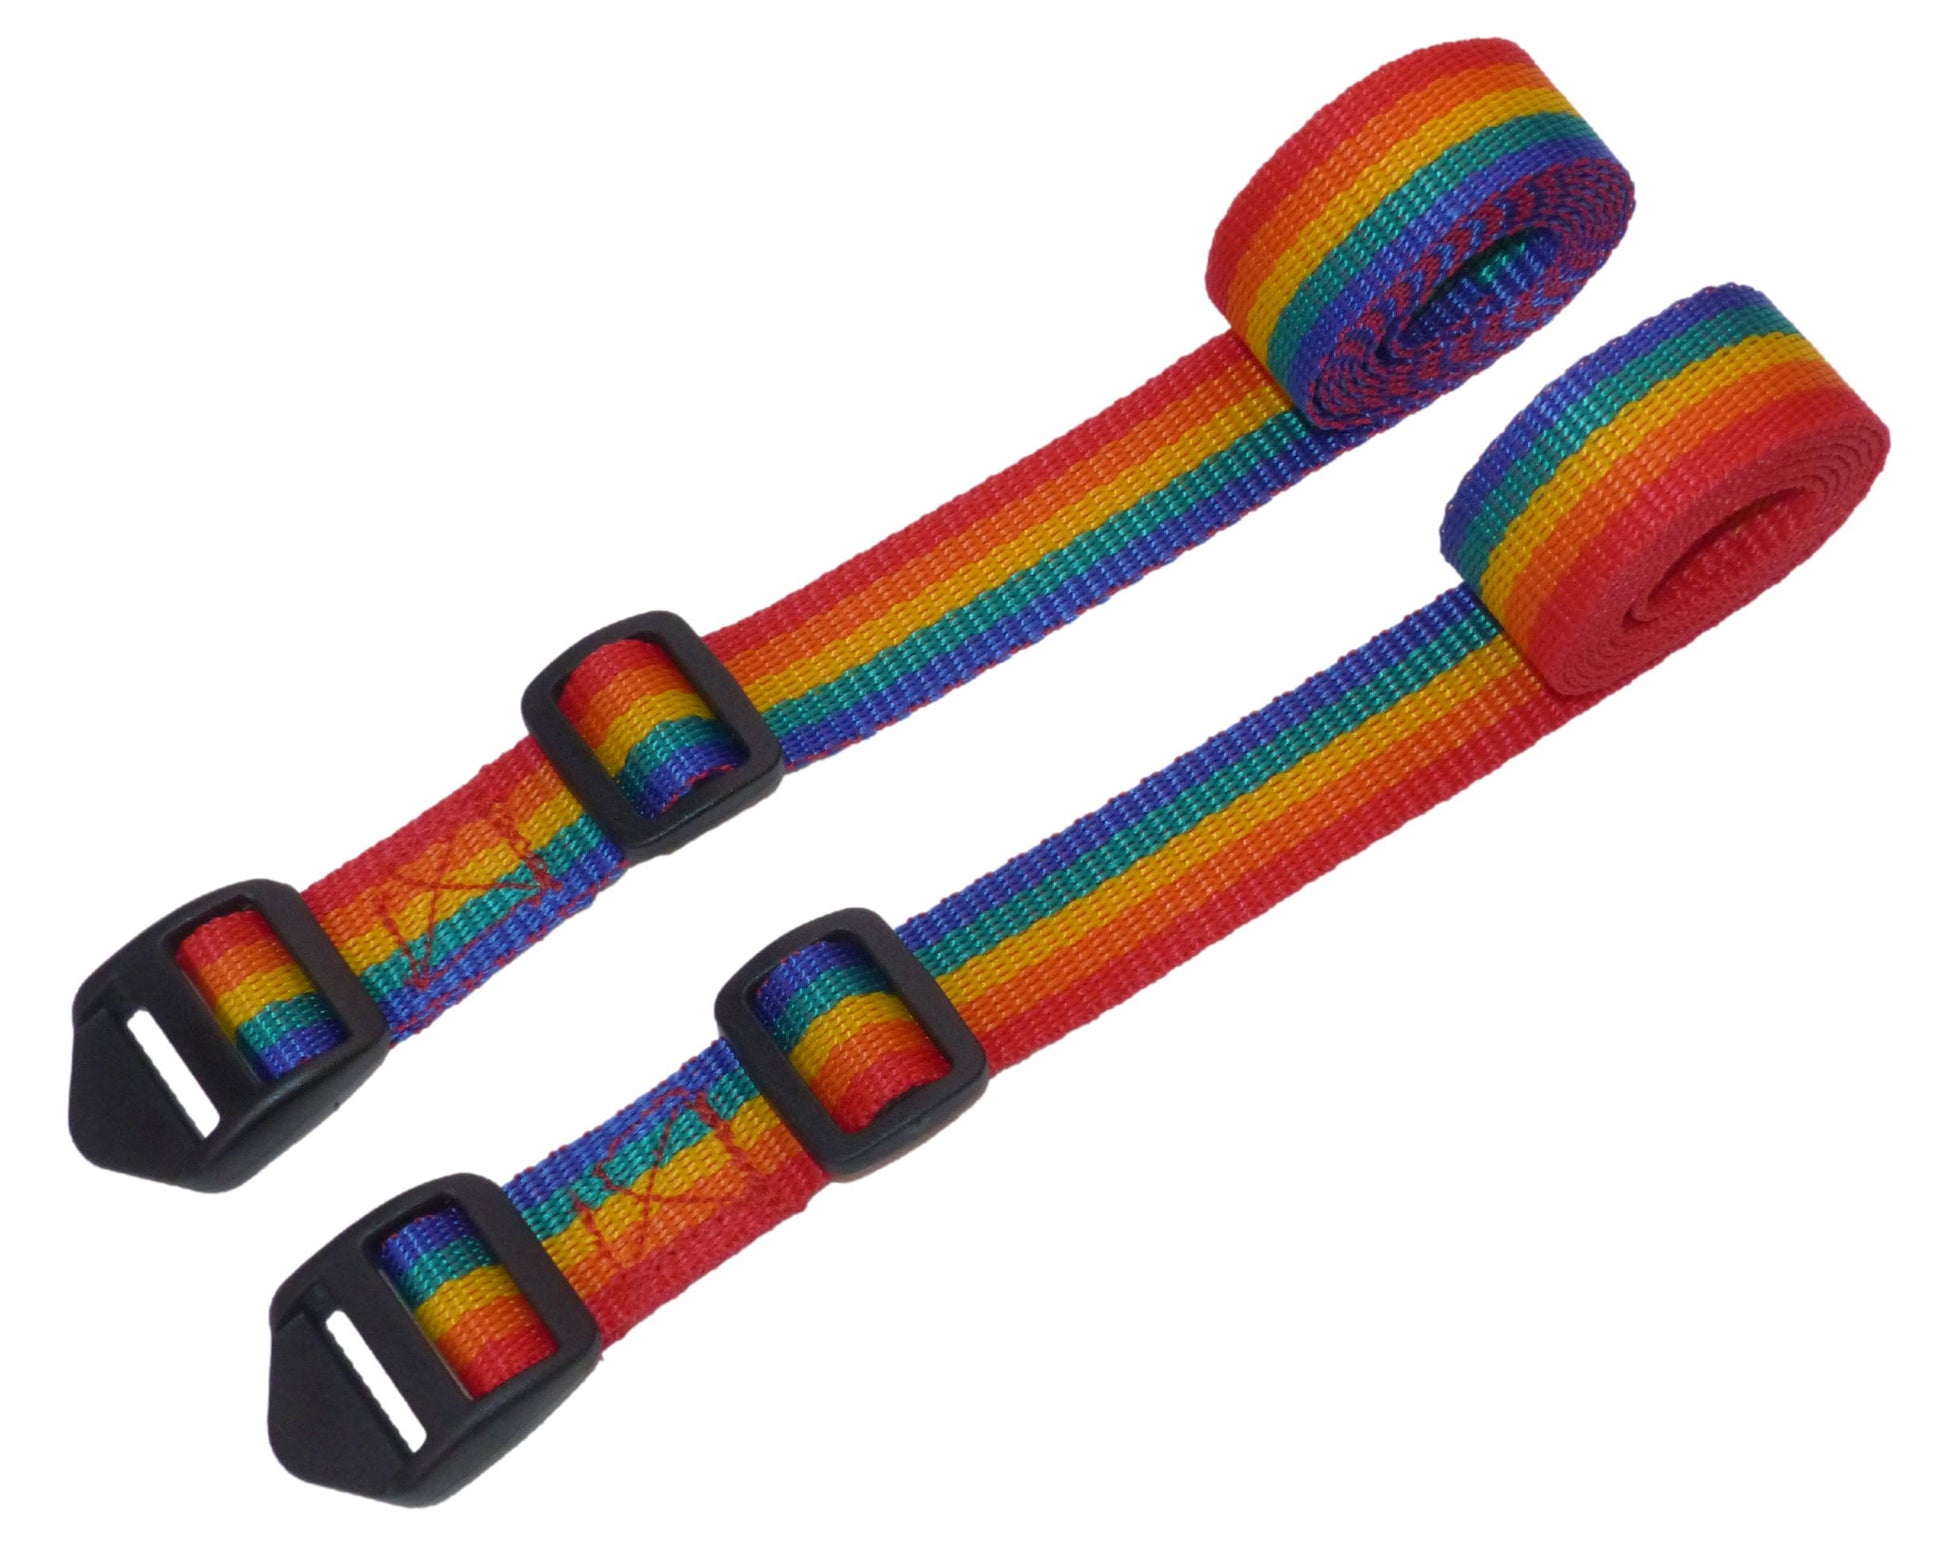 Benristraps 25mm Webbing Strap with Ladderloc Buckle (Pair) in rainbow